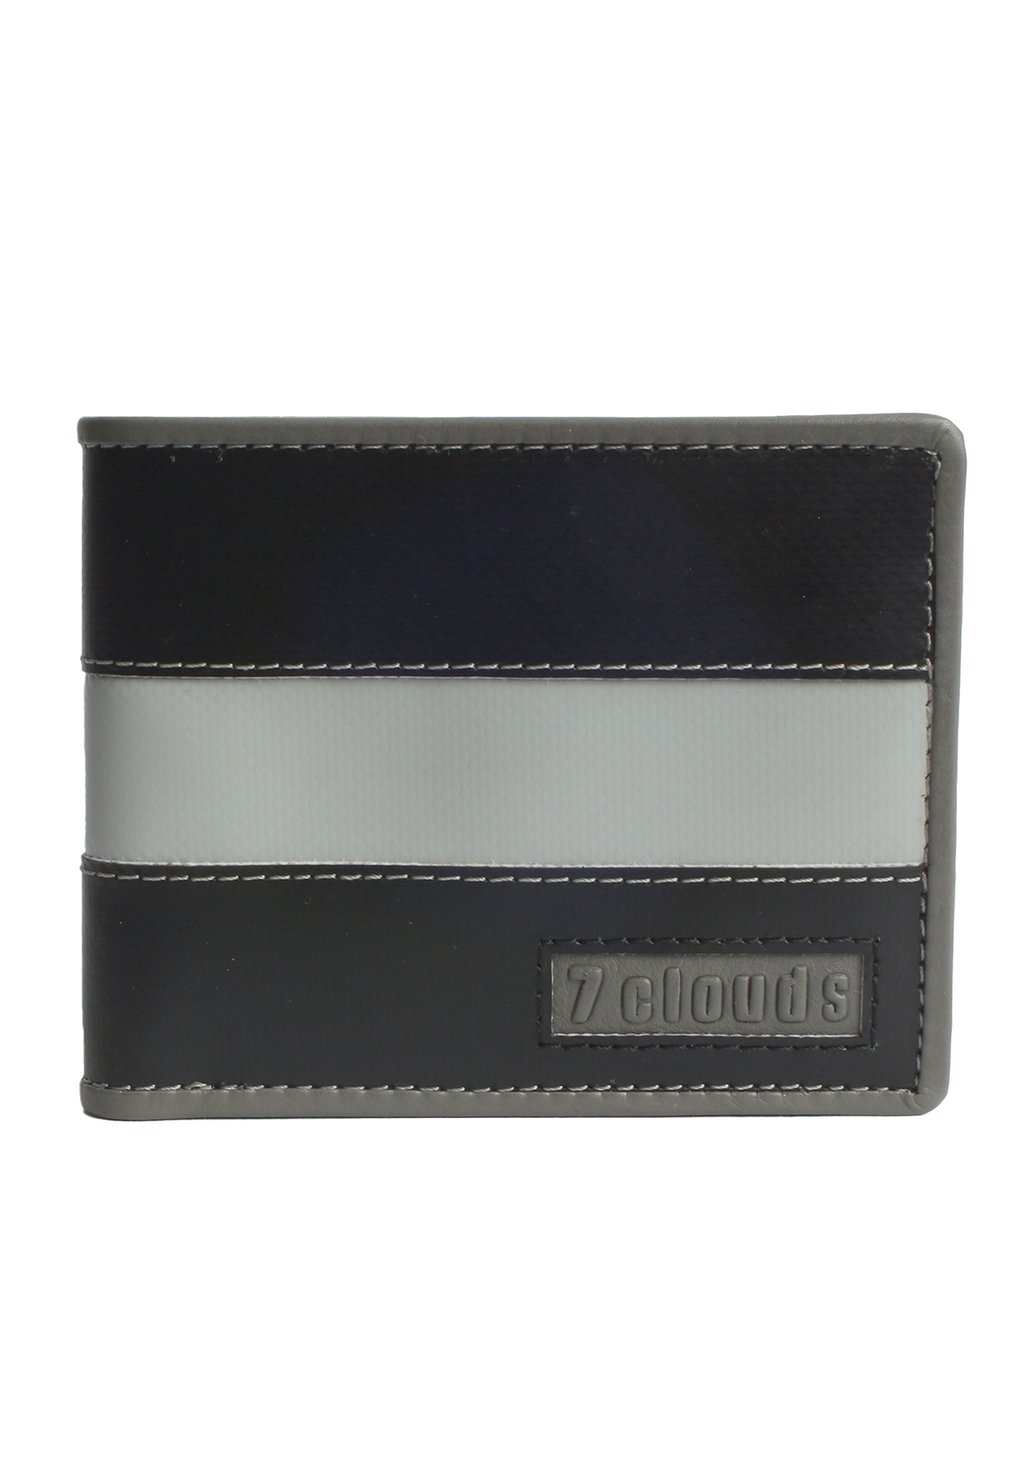 Кошелек RFID-MEKUN 7 1 7Clouds, цвет black grey black